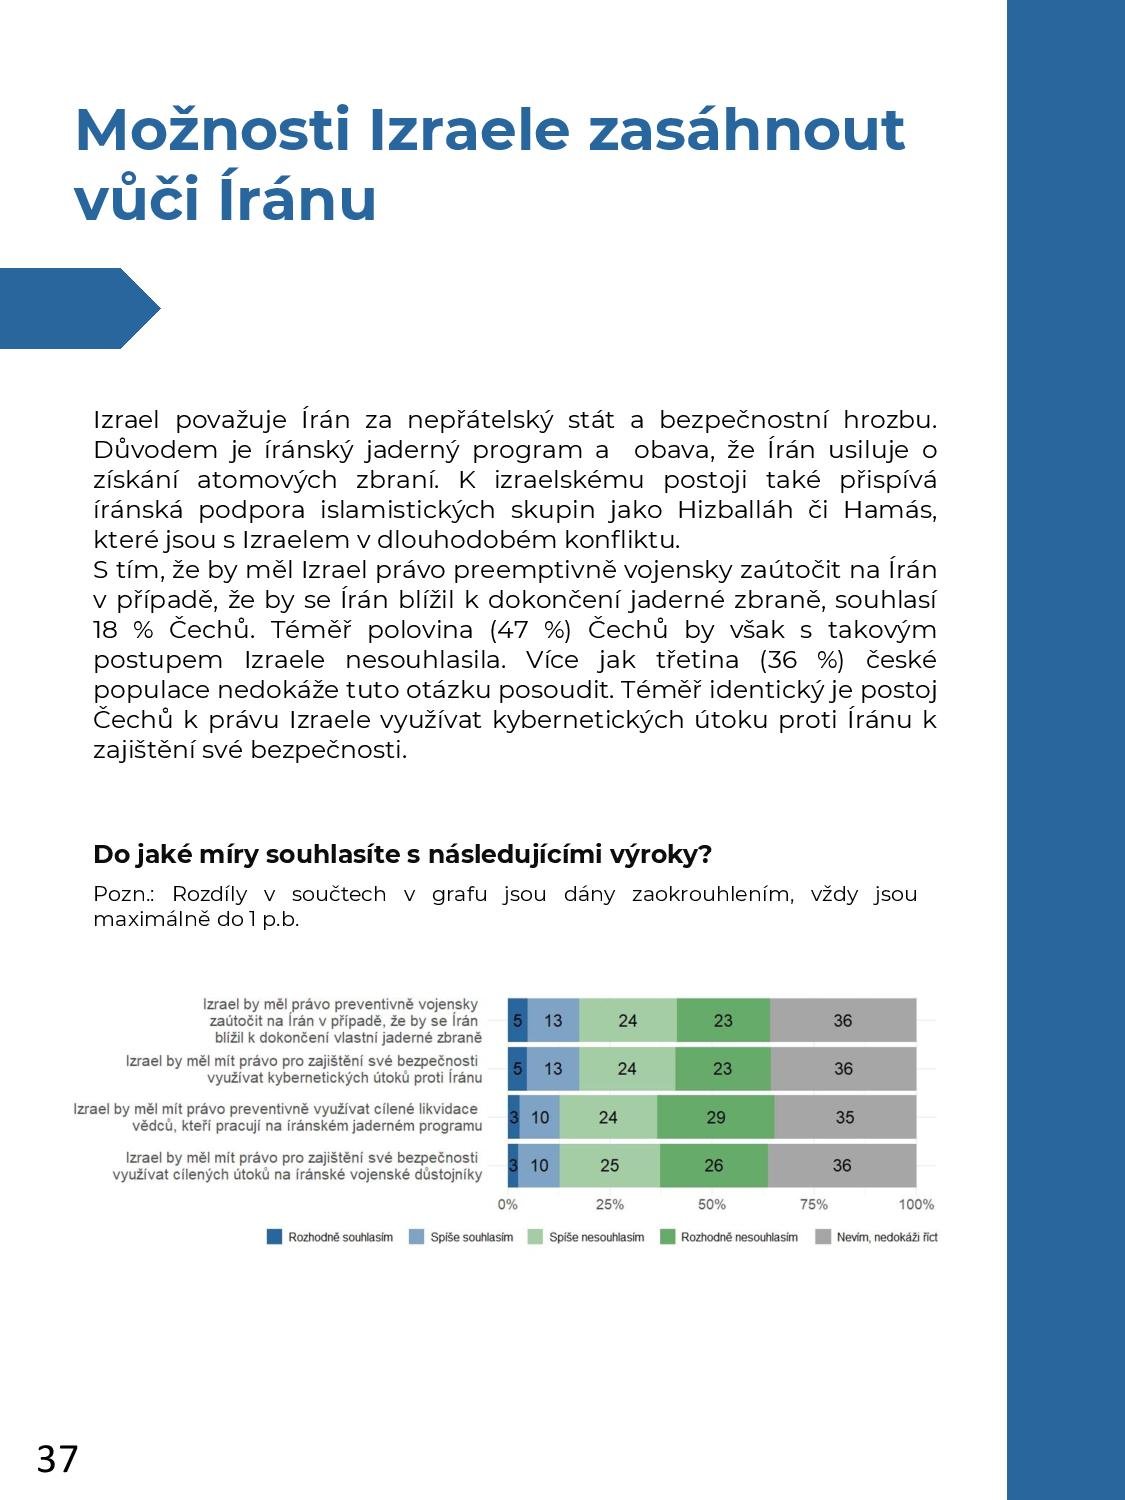 HCIS_PRCP_Public attitudes towards Israel_REPORT_CZ_Finální (2)-page-037.jpg